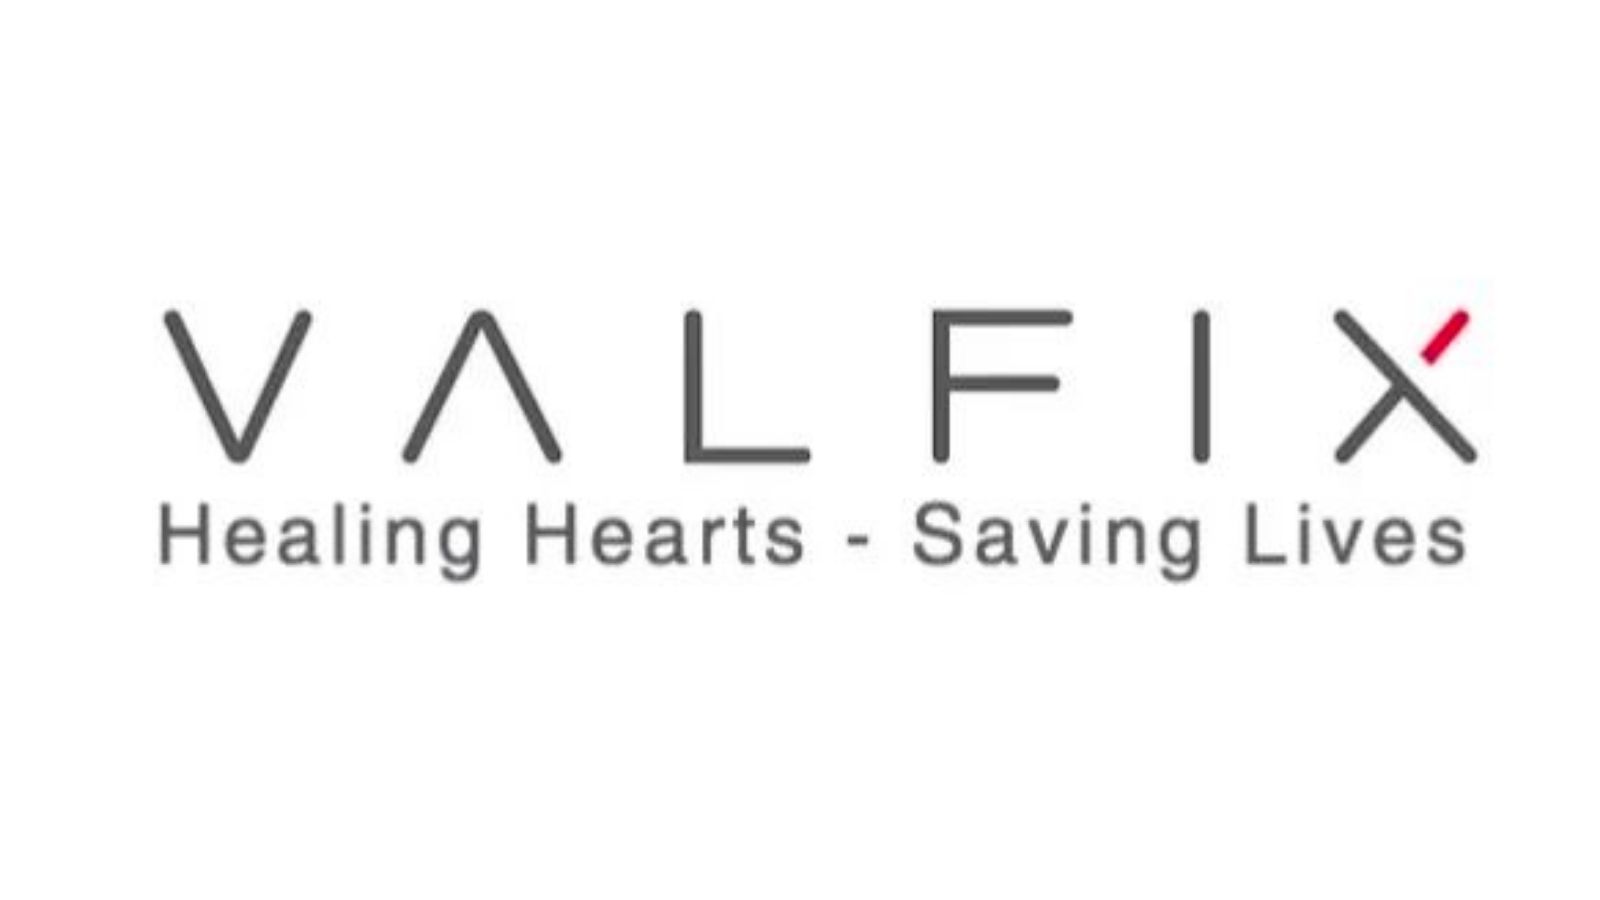 VALFIX Medical，创造了革命性的二尖瓣修复系统